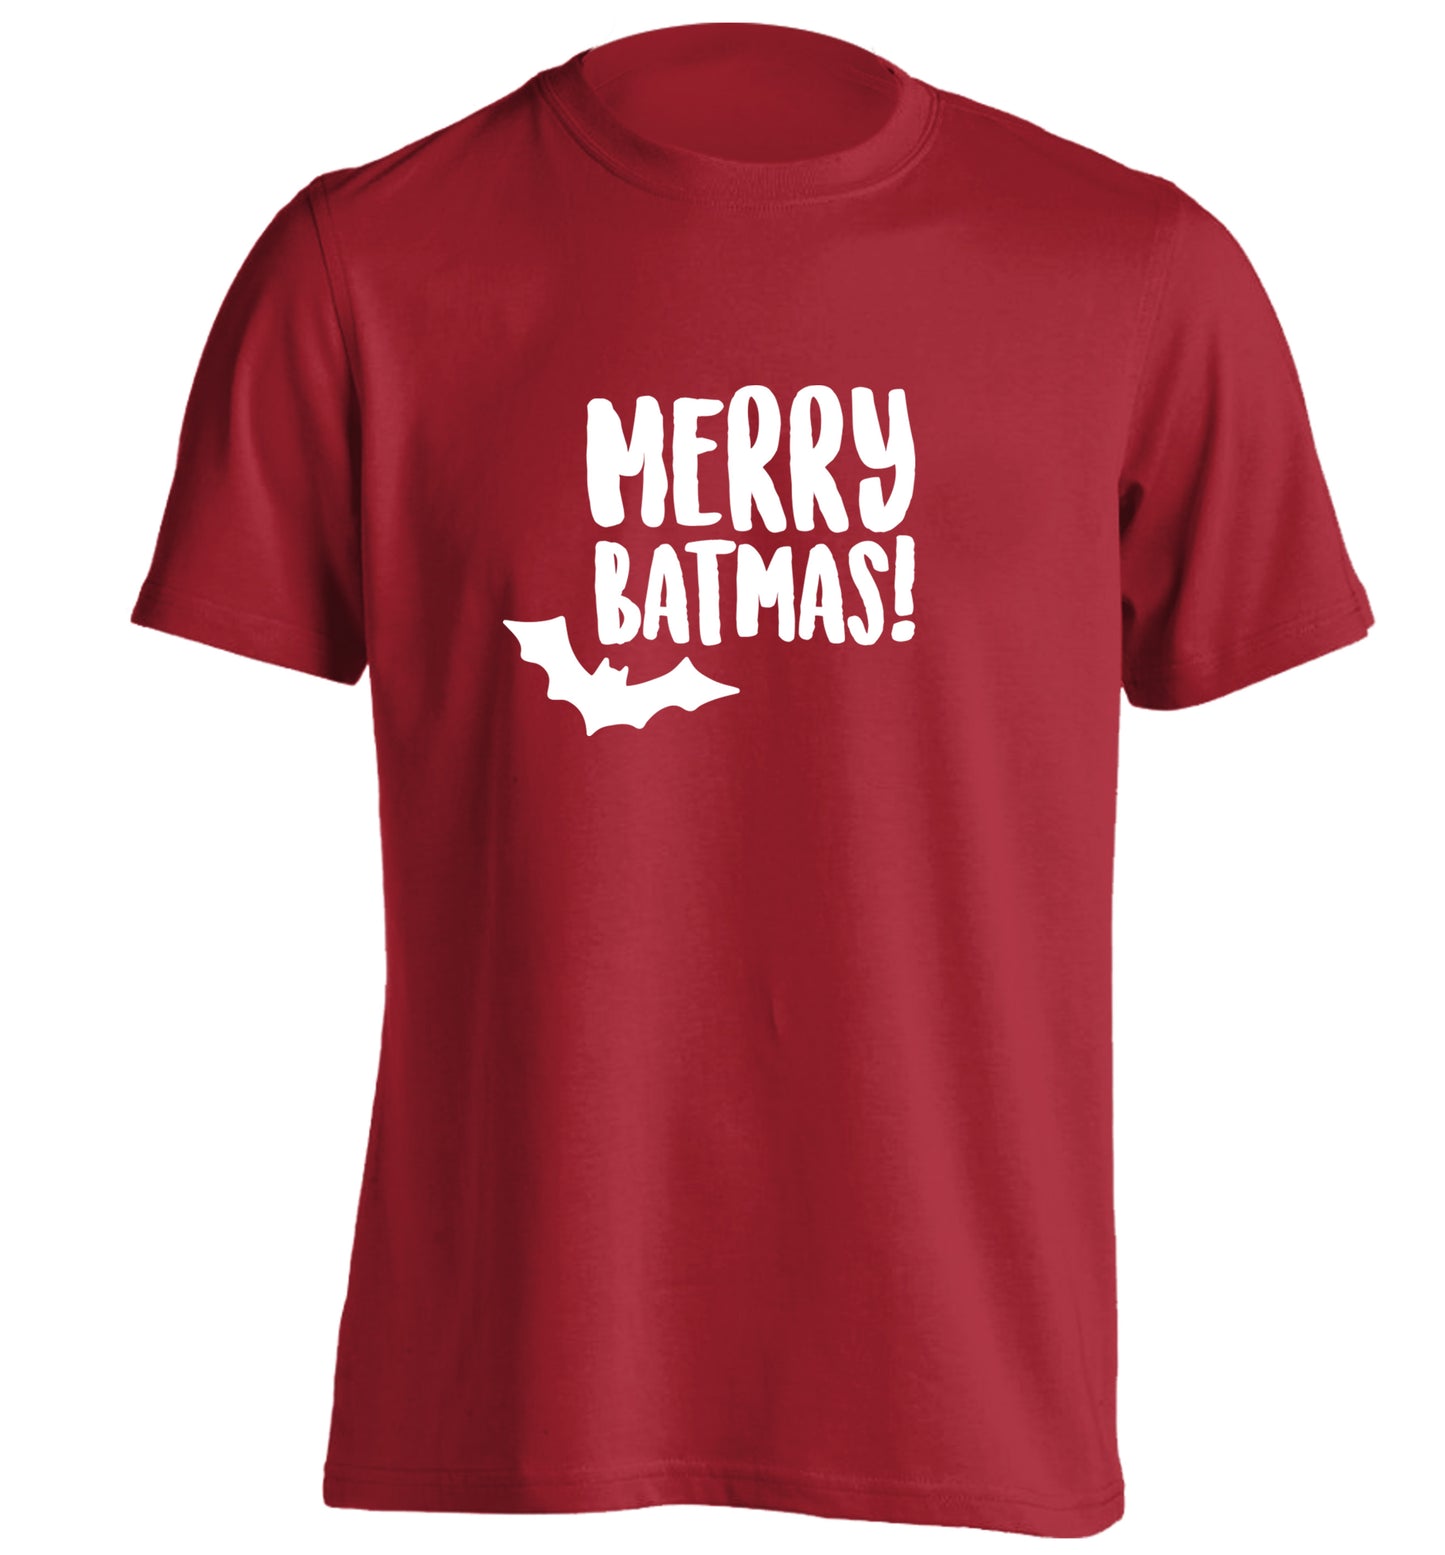 Merry Batmas adults unisex red Tshirt 2XL